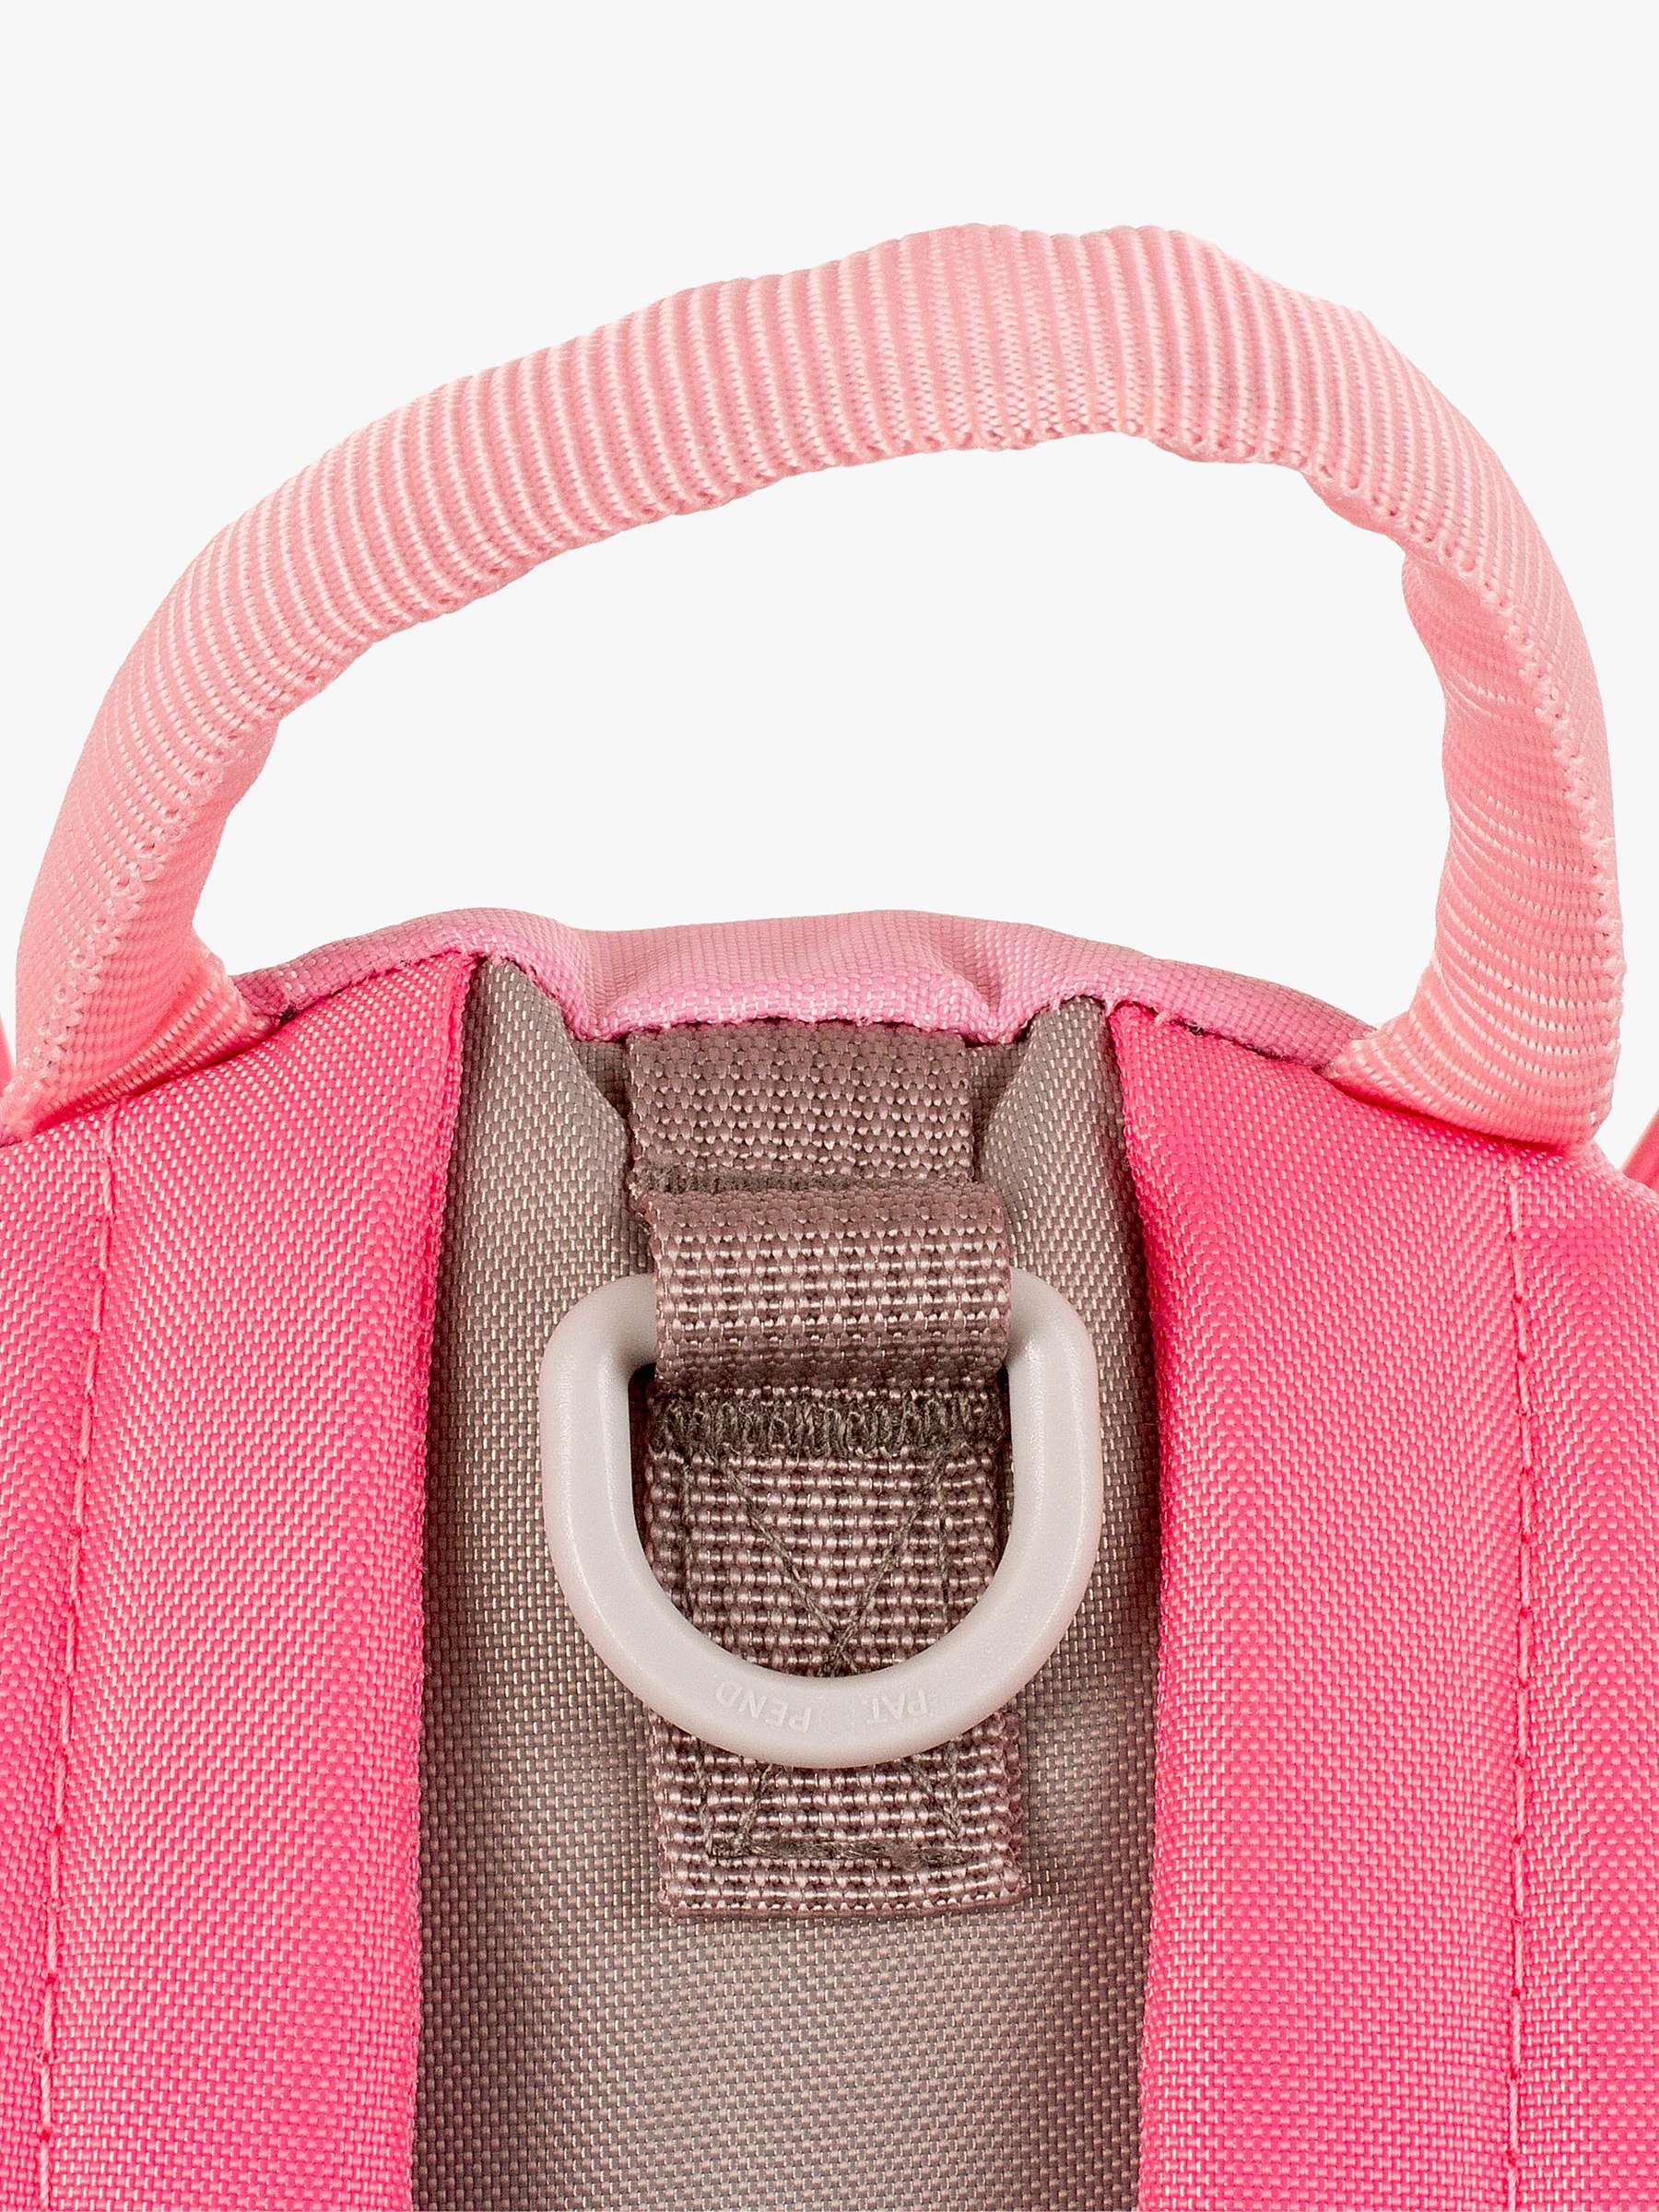 Buy LittleLife Butterfly Toddler Backpack, Pink Online at johnlewis.com